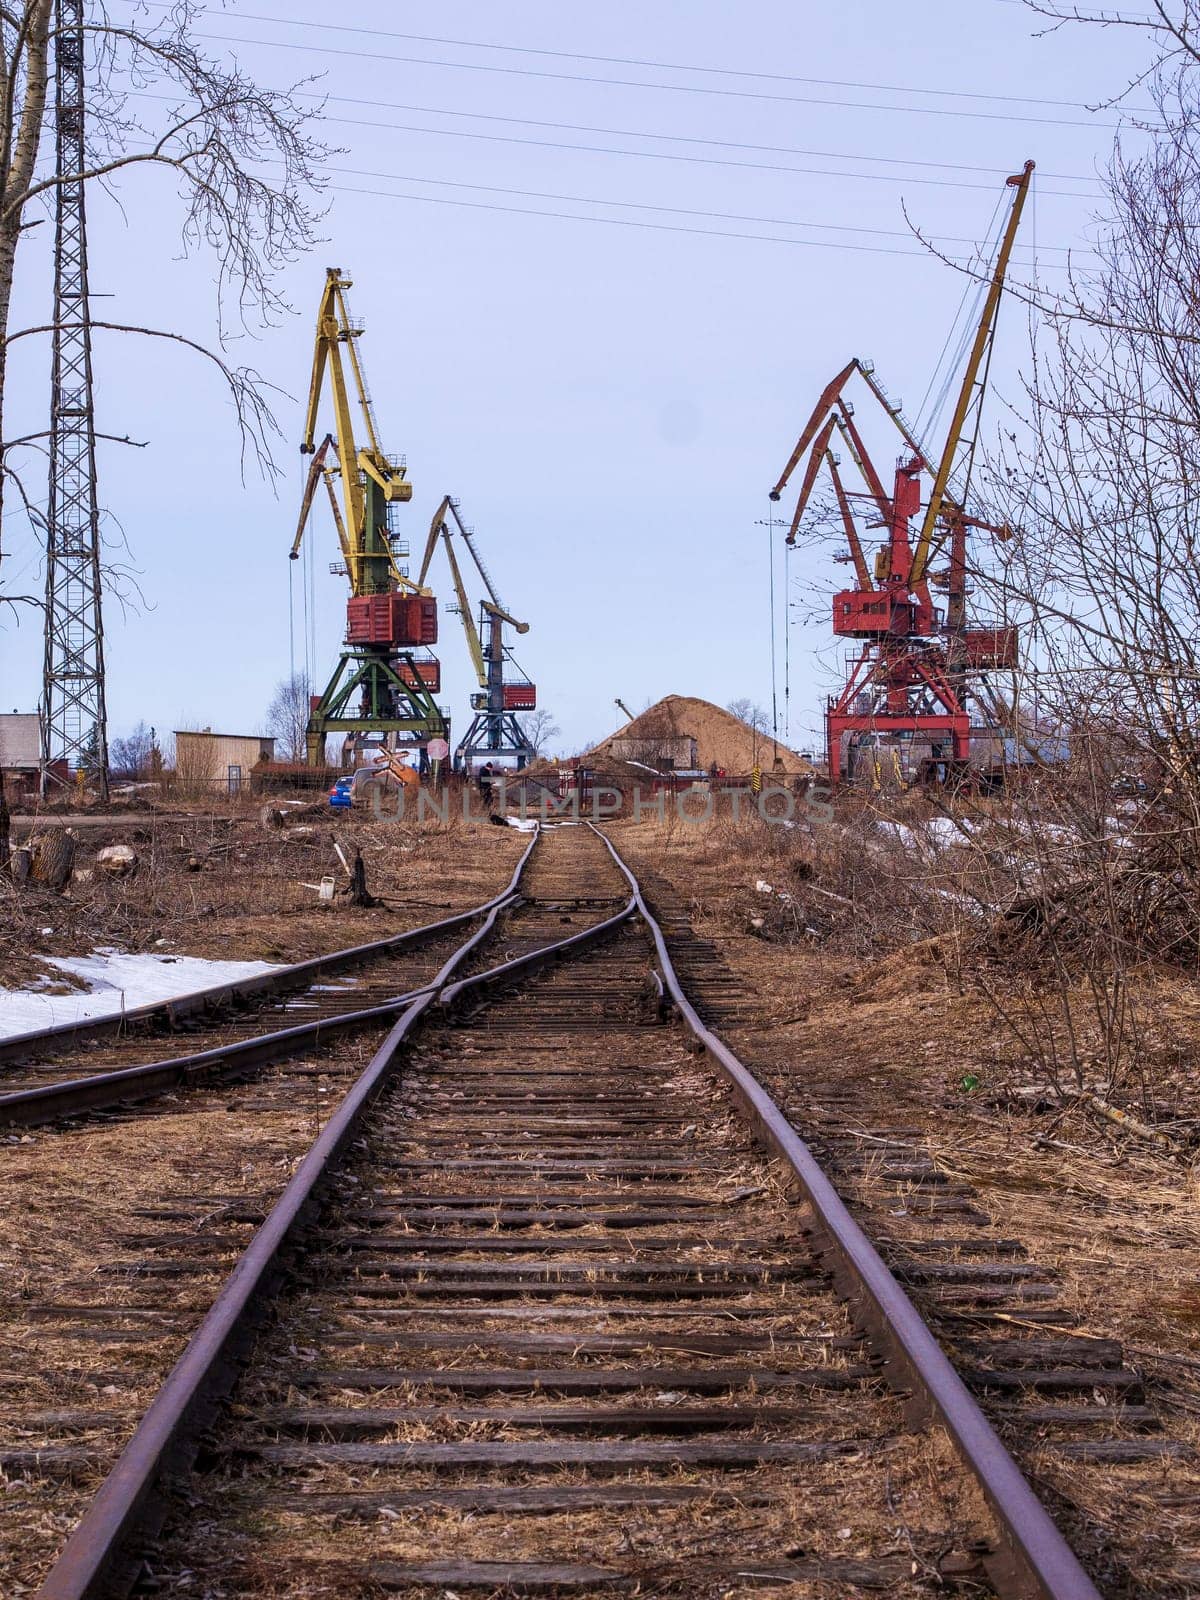 Rail road tracks under the gantry cranes on the berth of sea merchant port